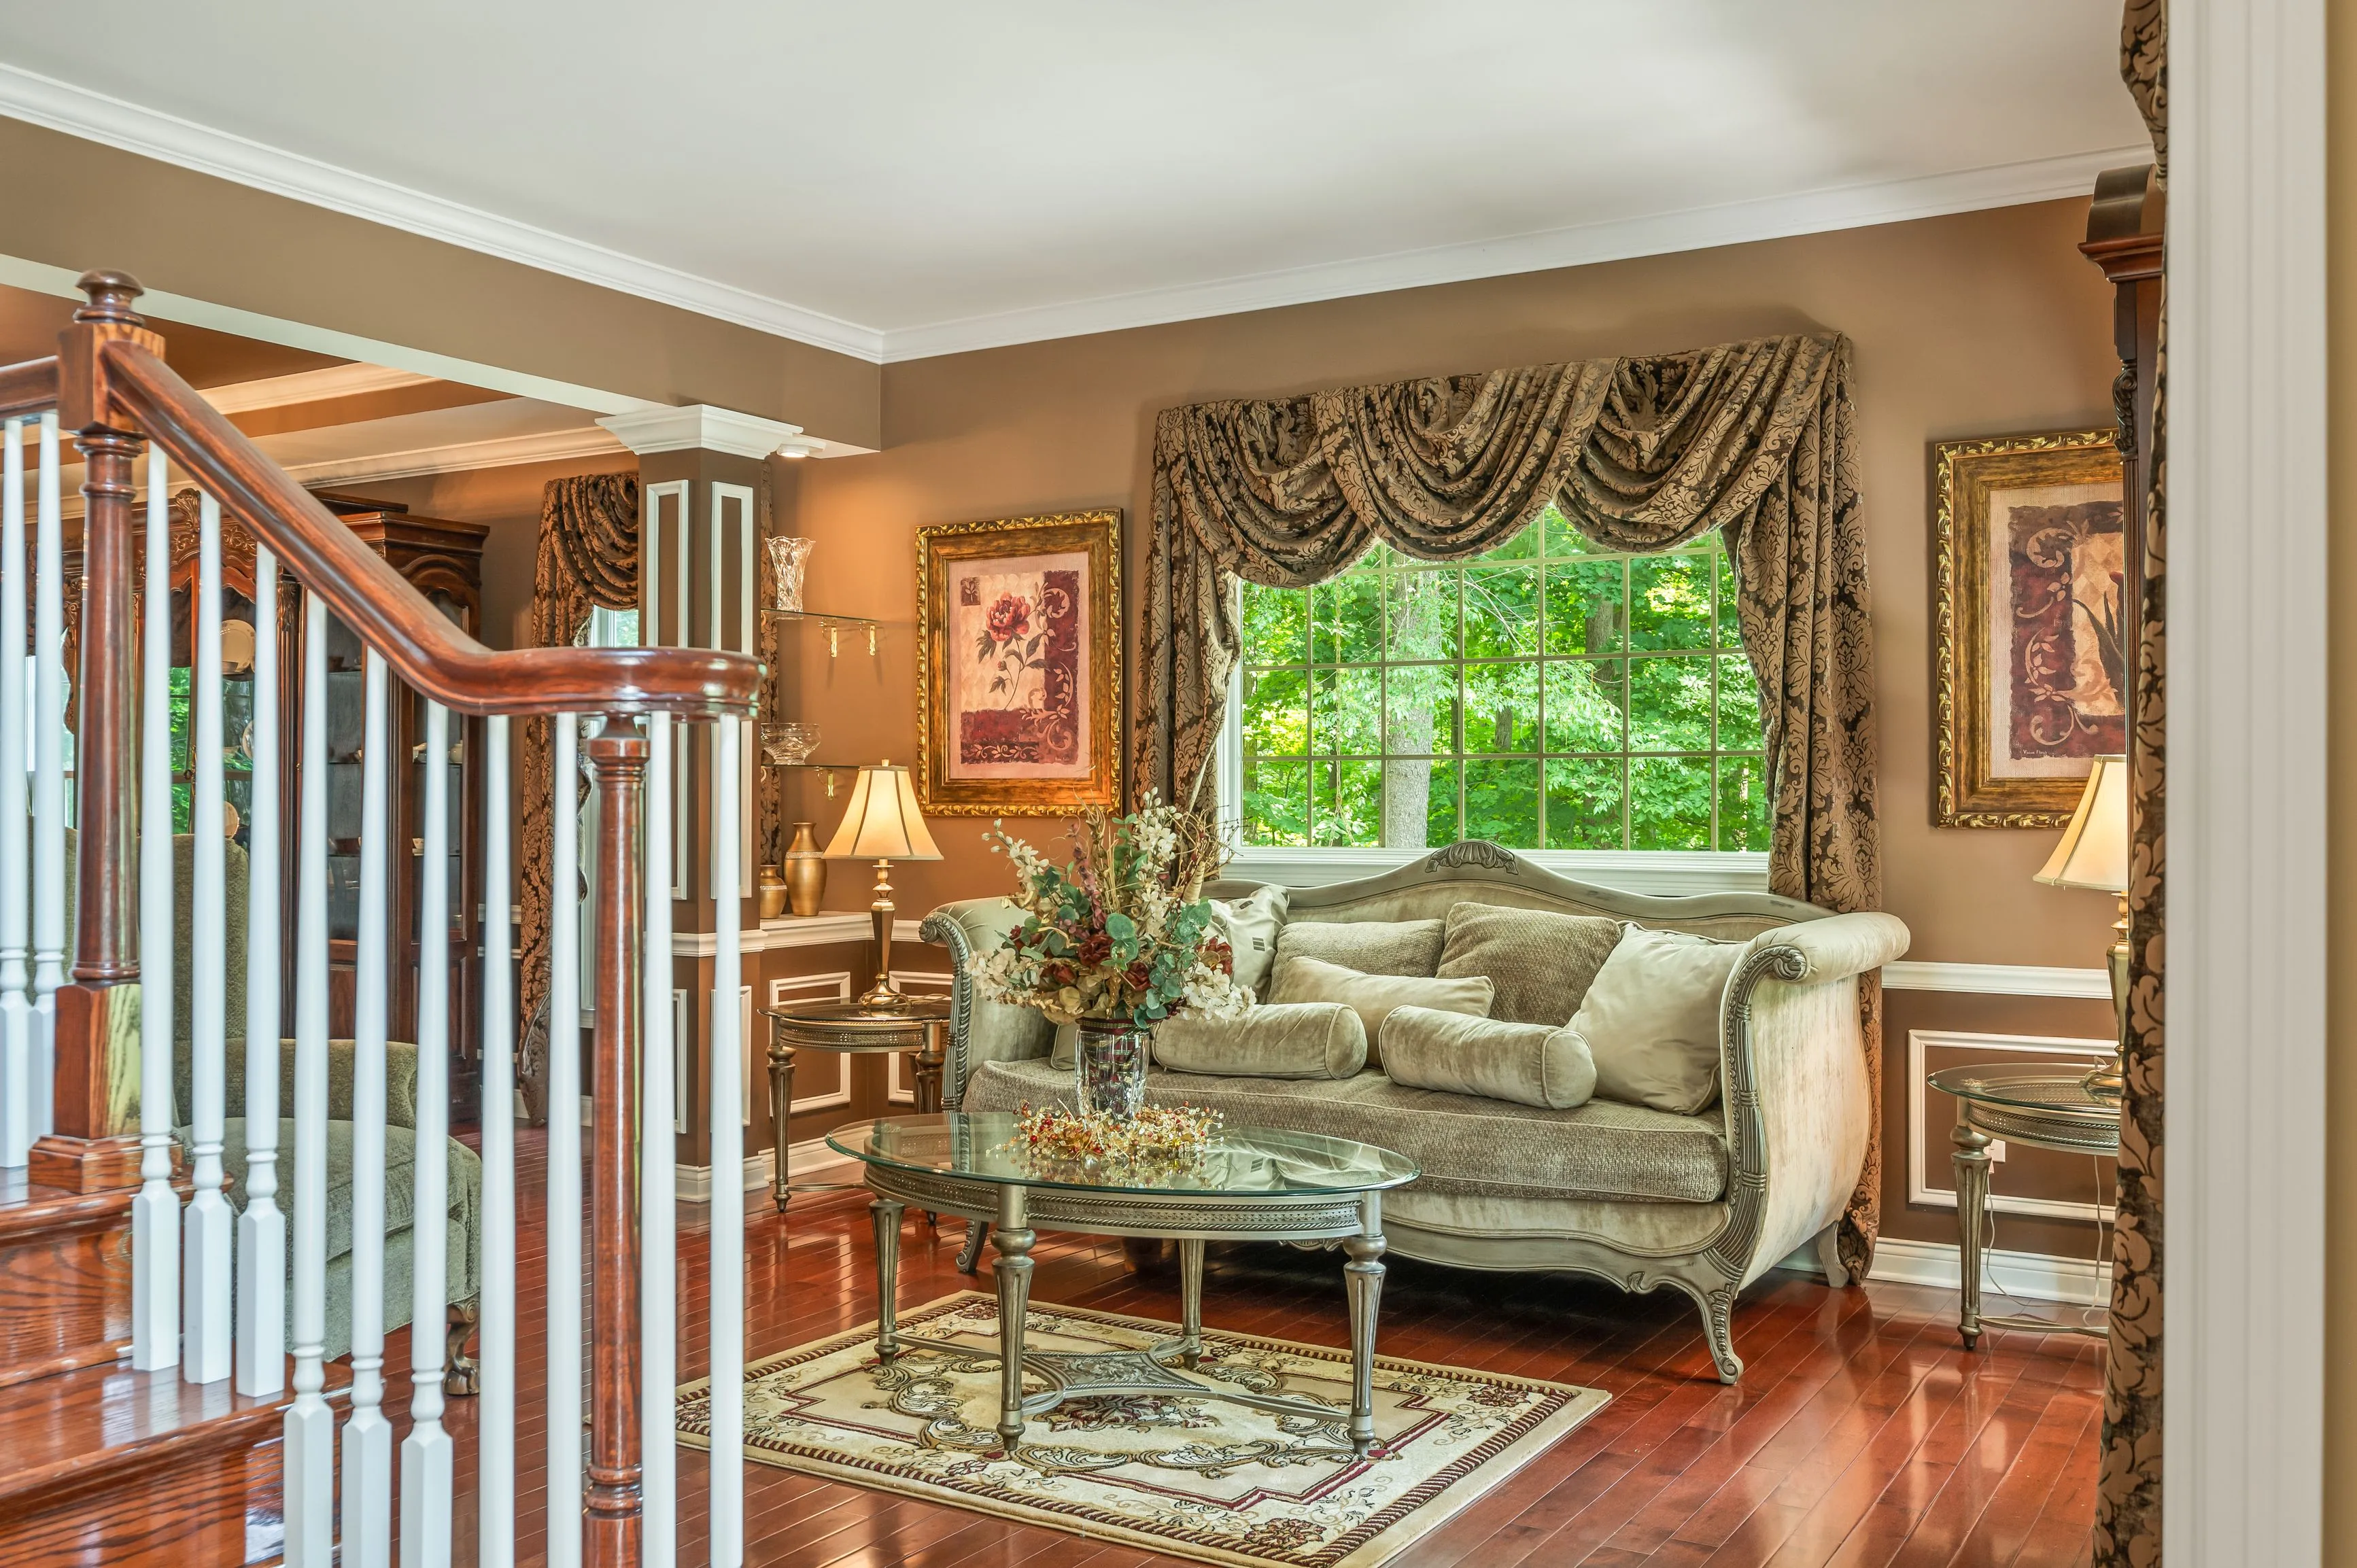 Elegant living room interior with large windows, traditional furniture, and hardwood floors.